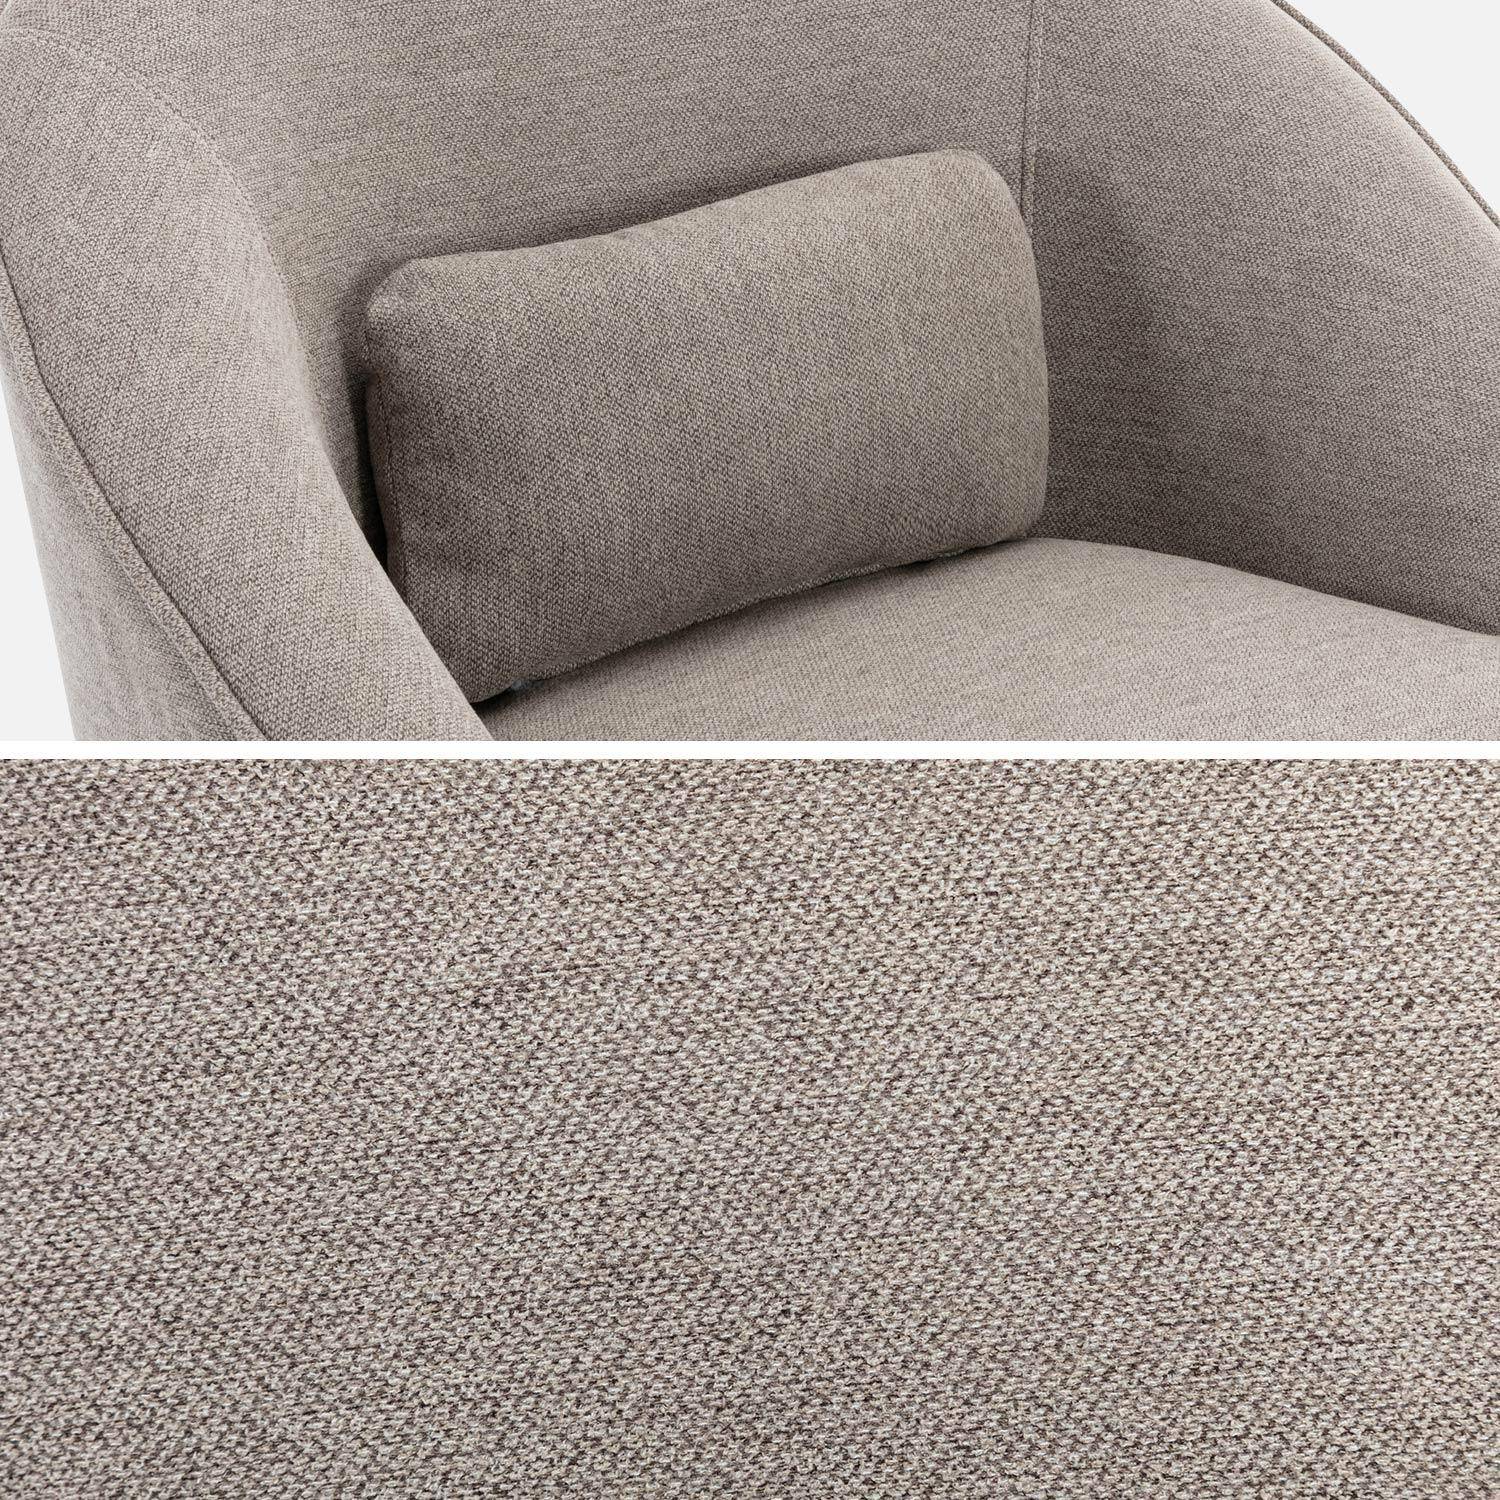 360° draaibare fauteuil, Lana, in taupe stof, met kussen B 80 x D 73 x H 77cm Photo7